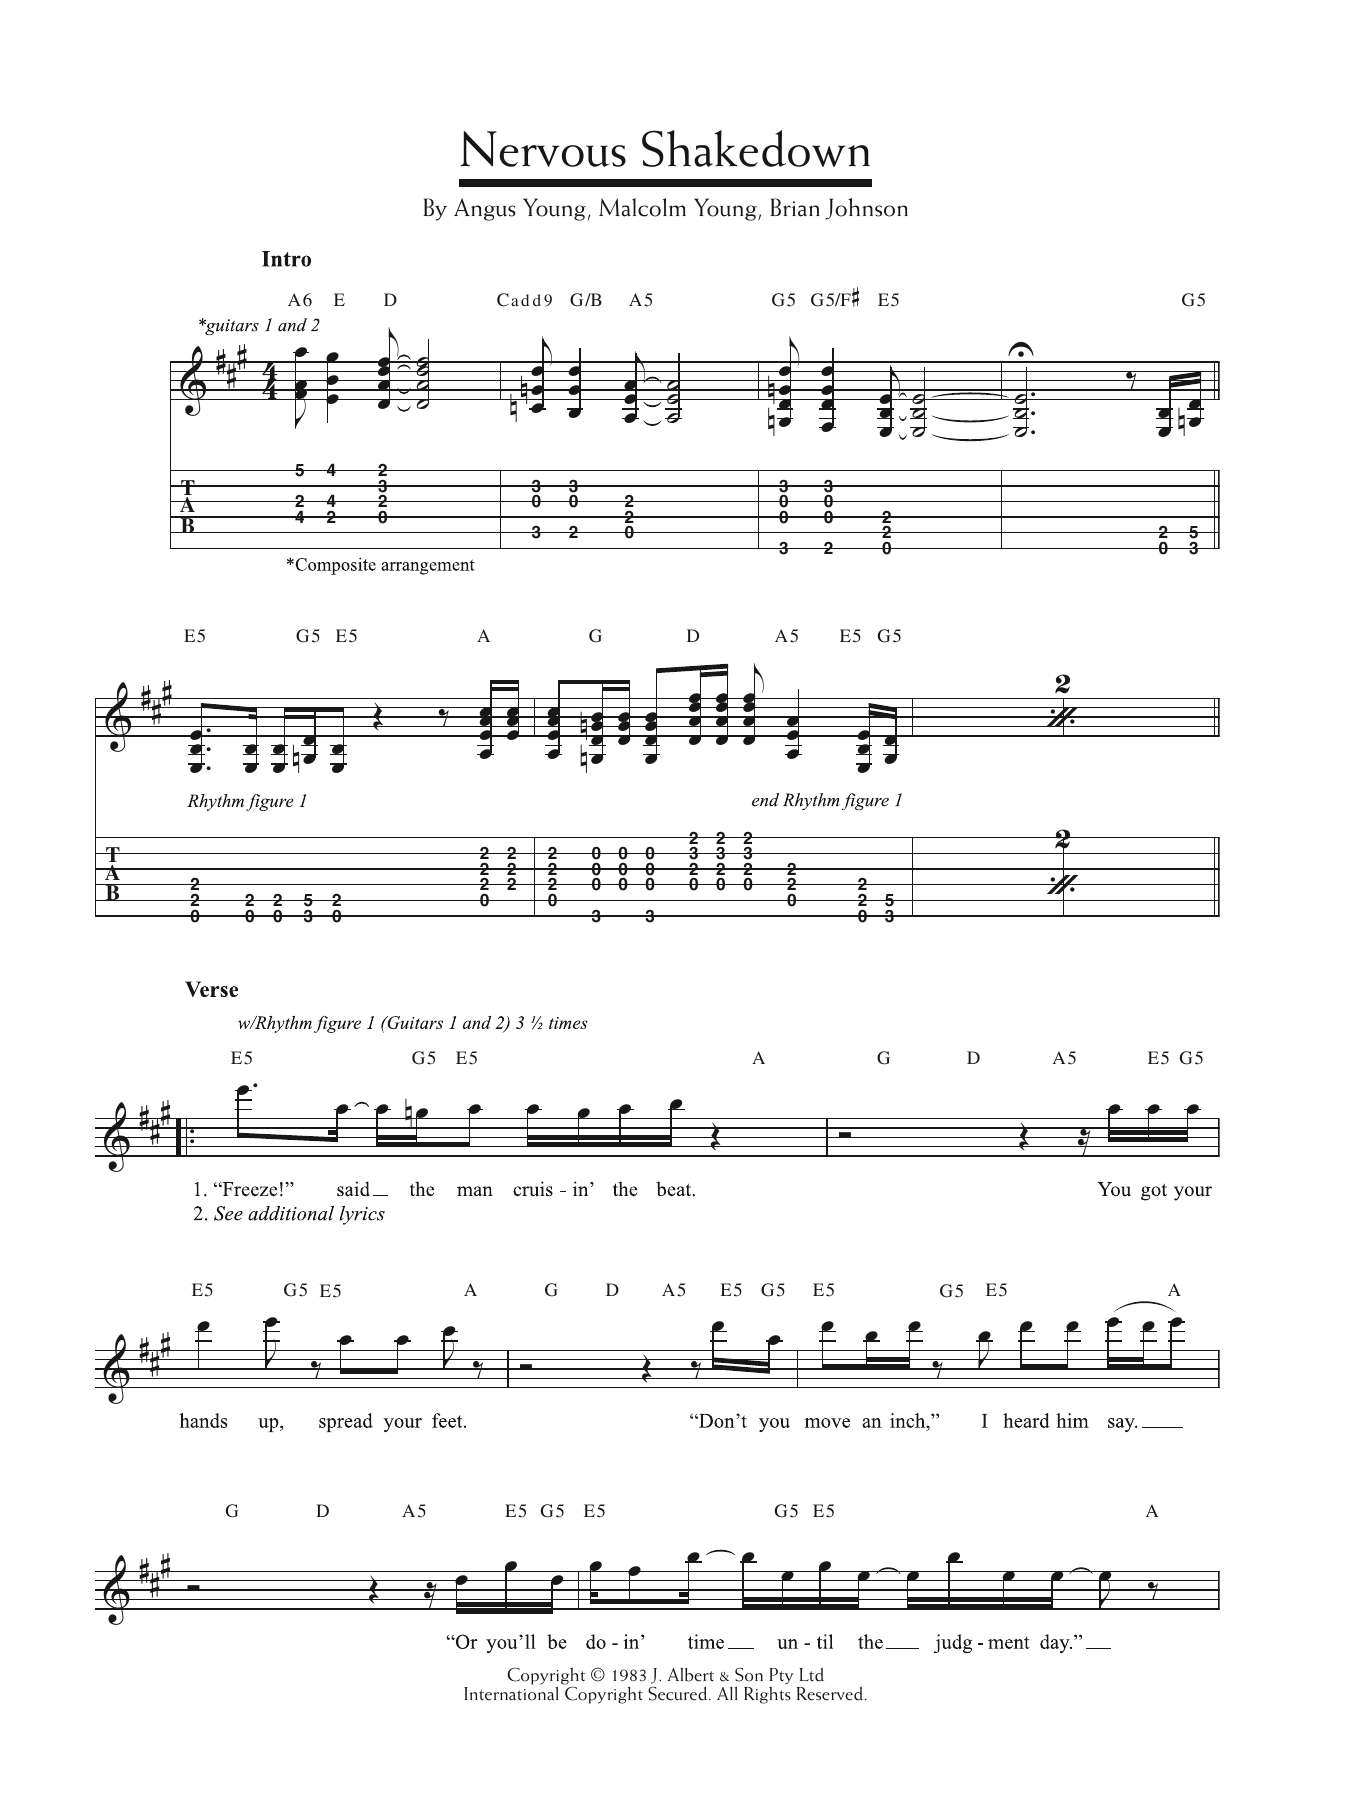 AC/DC Nervous Shakedown Sheet Music Notes & Chords for Lyrics & Chords - Download or Print PDF